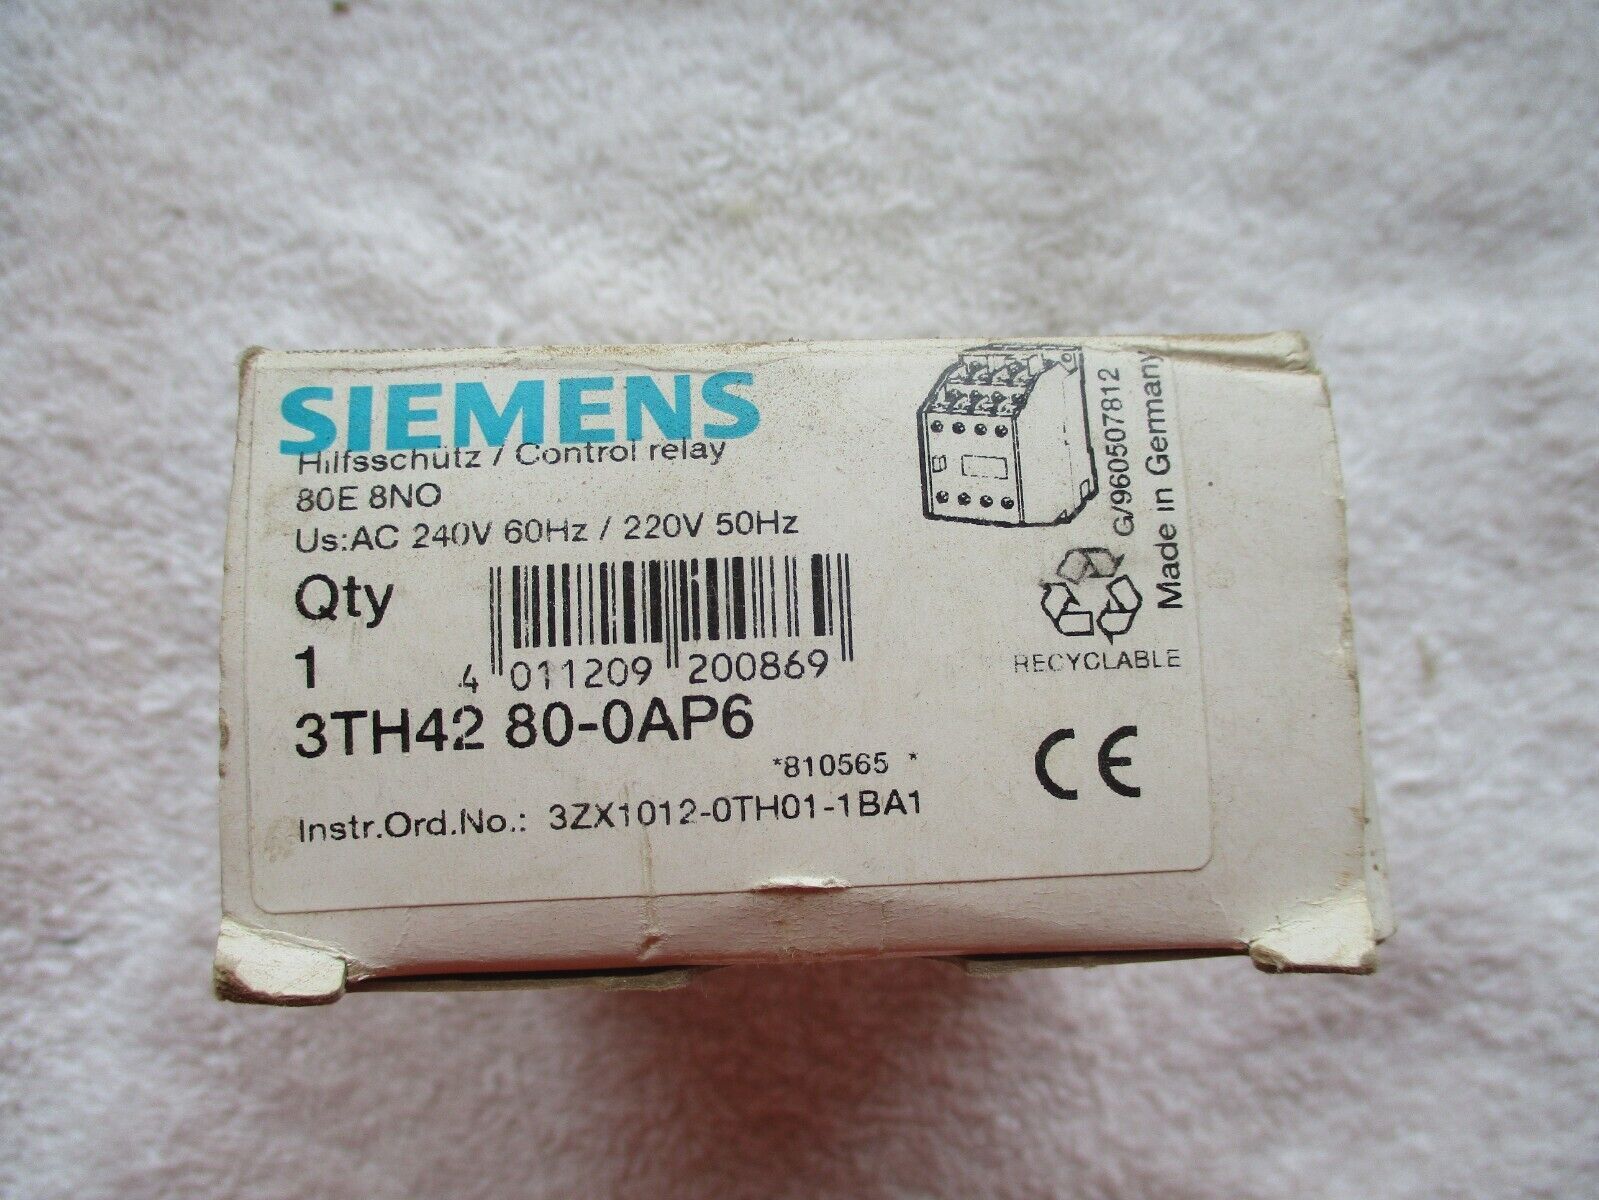 Siemens 3TH42 80-0AP6 Control Relay 220V/240V 50Hz/60Hz - New In Box